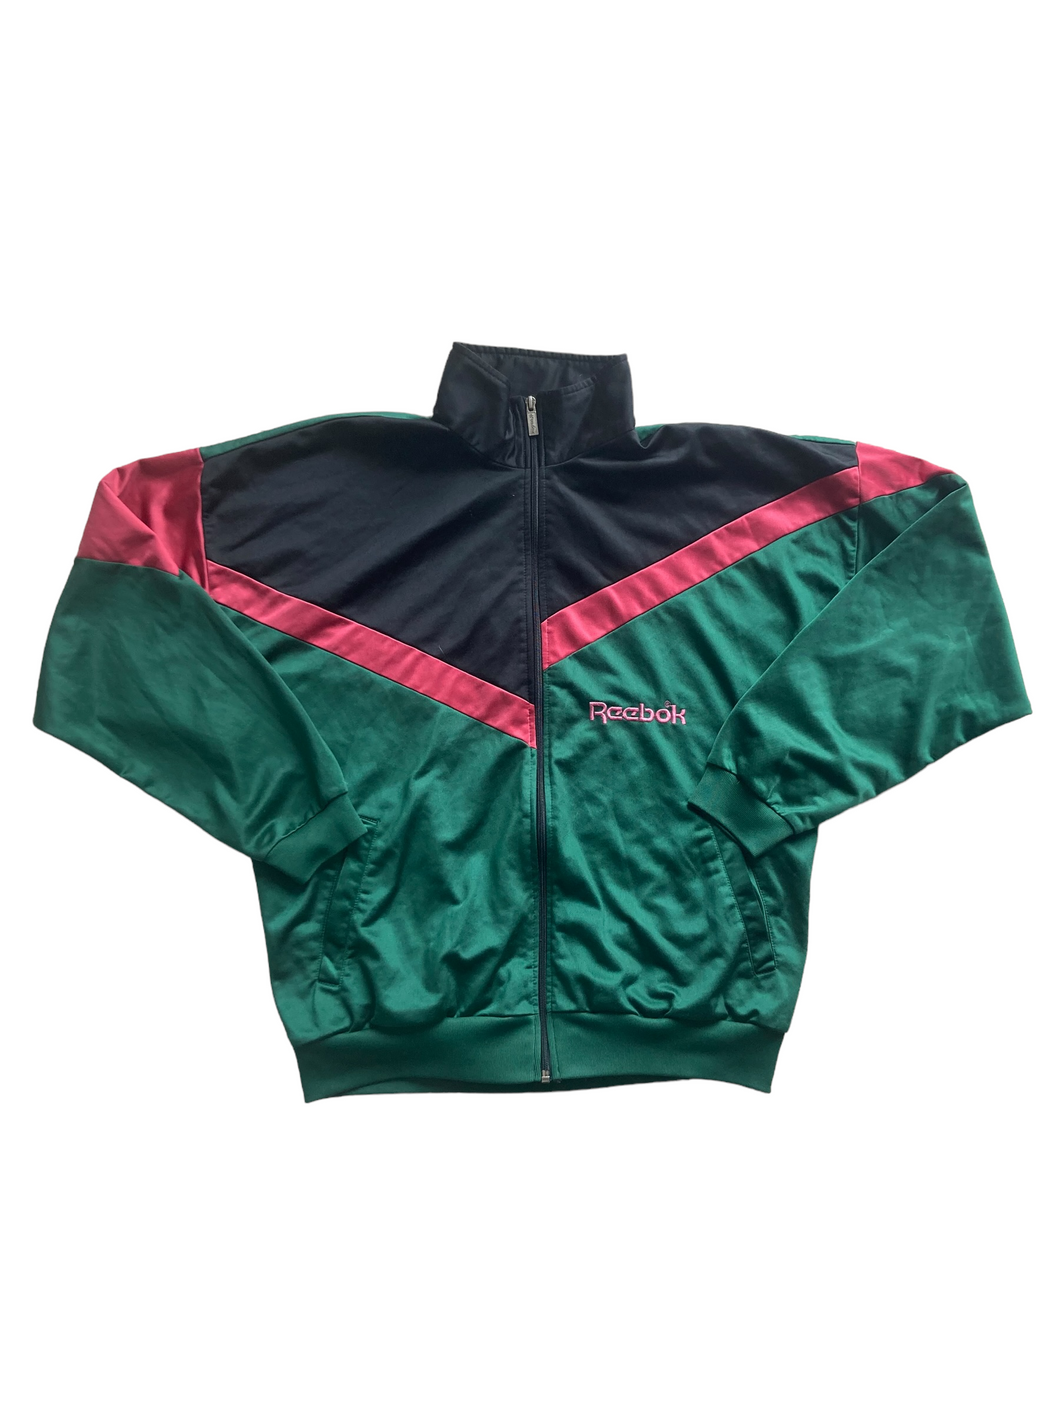 vintage dark green reebok sports jacket